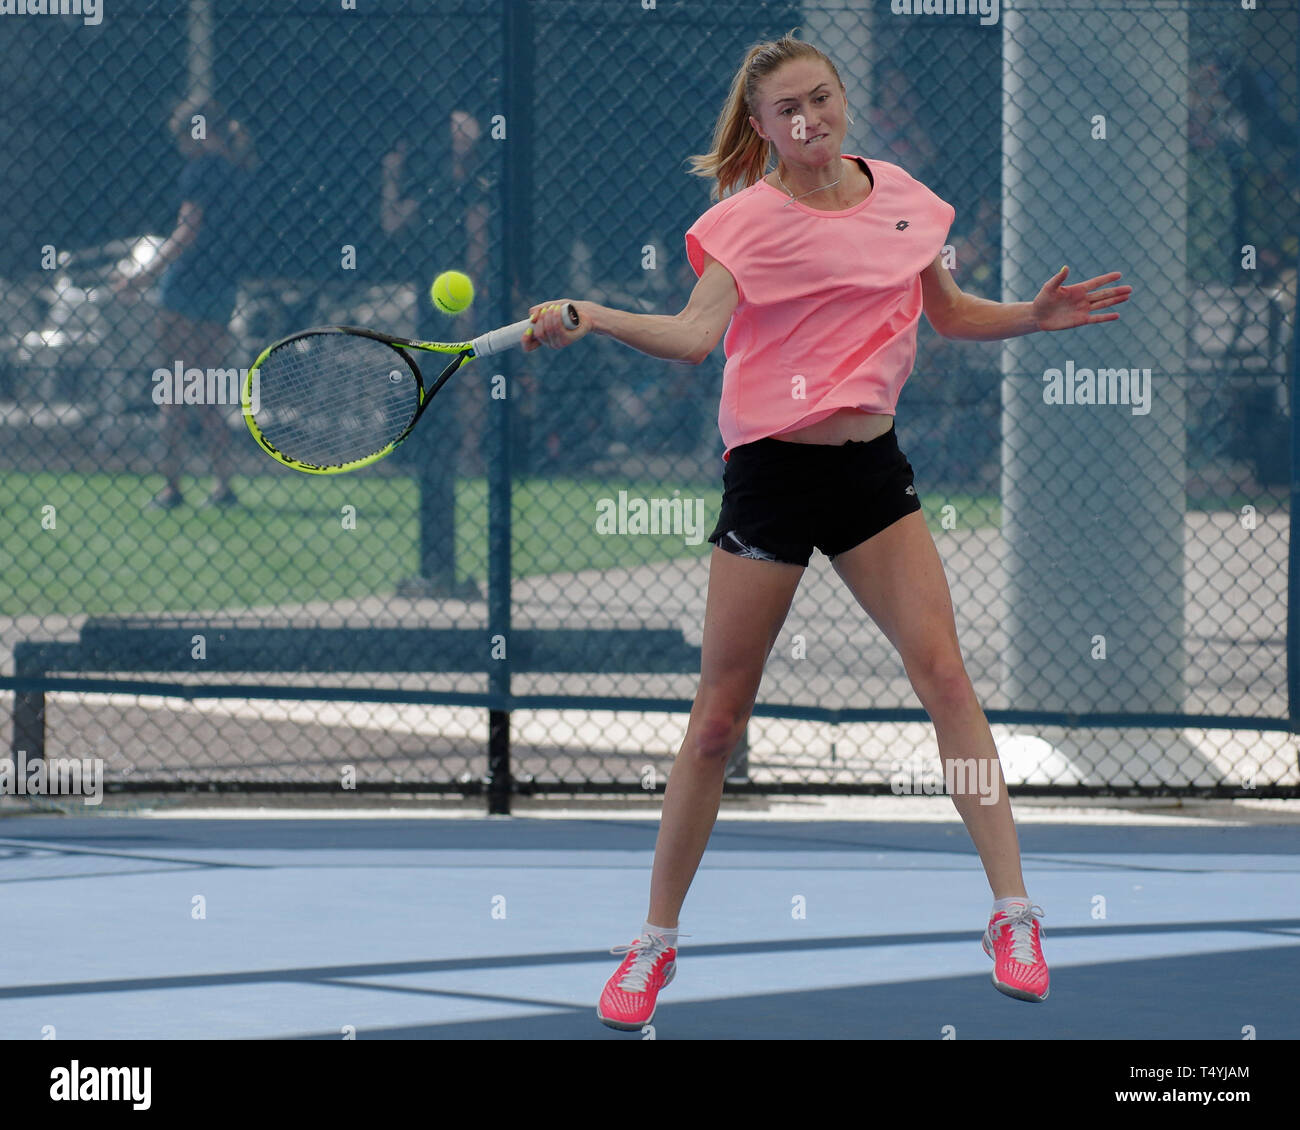 Aliaksandra Sasnovich in Ausbildung Fed Cup Halbfinale April 2019 QTC Showcourt Brisbane Australien Stockfoto